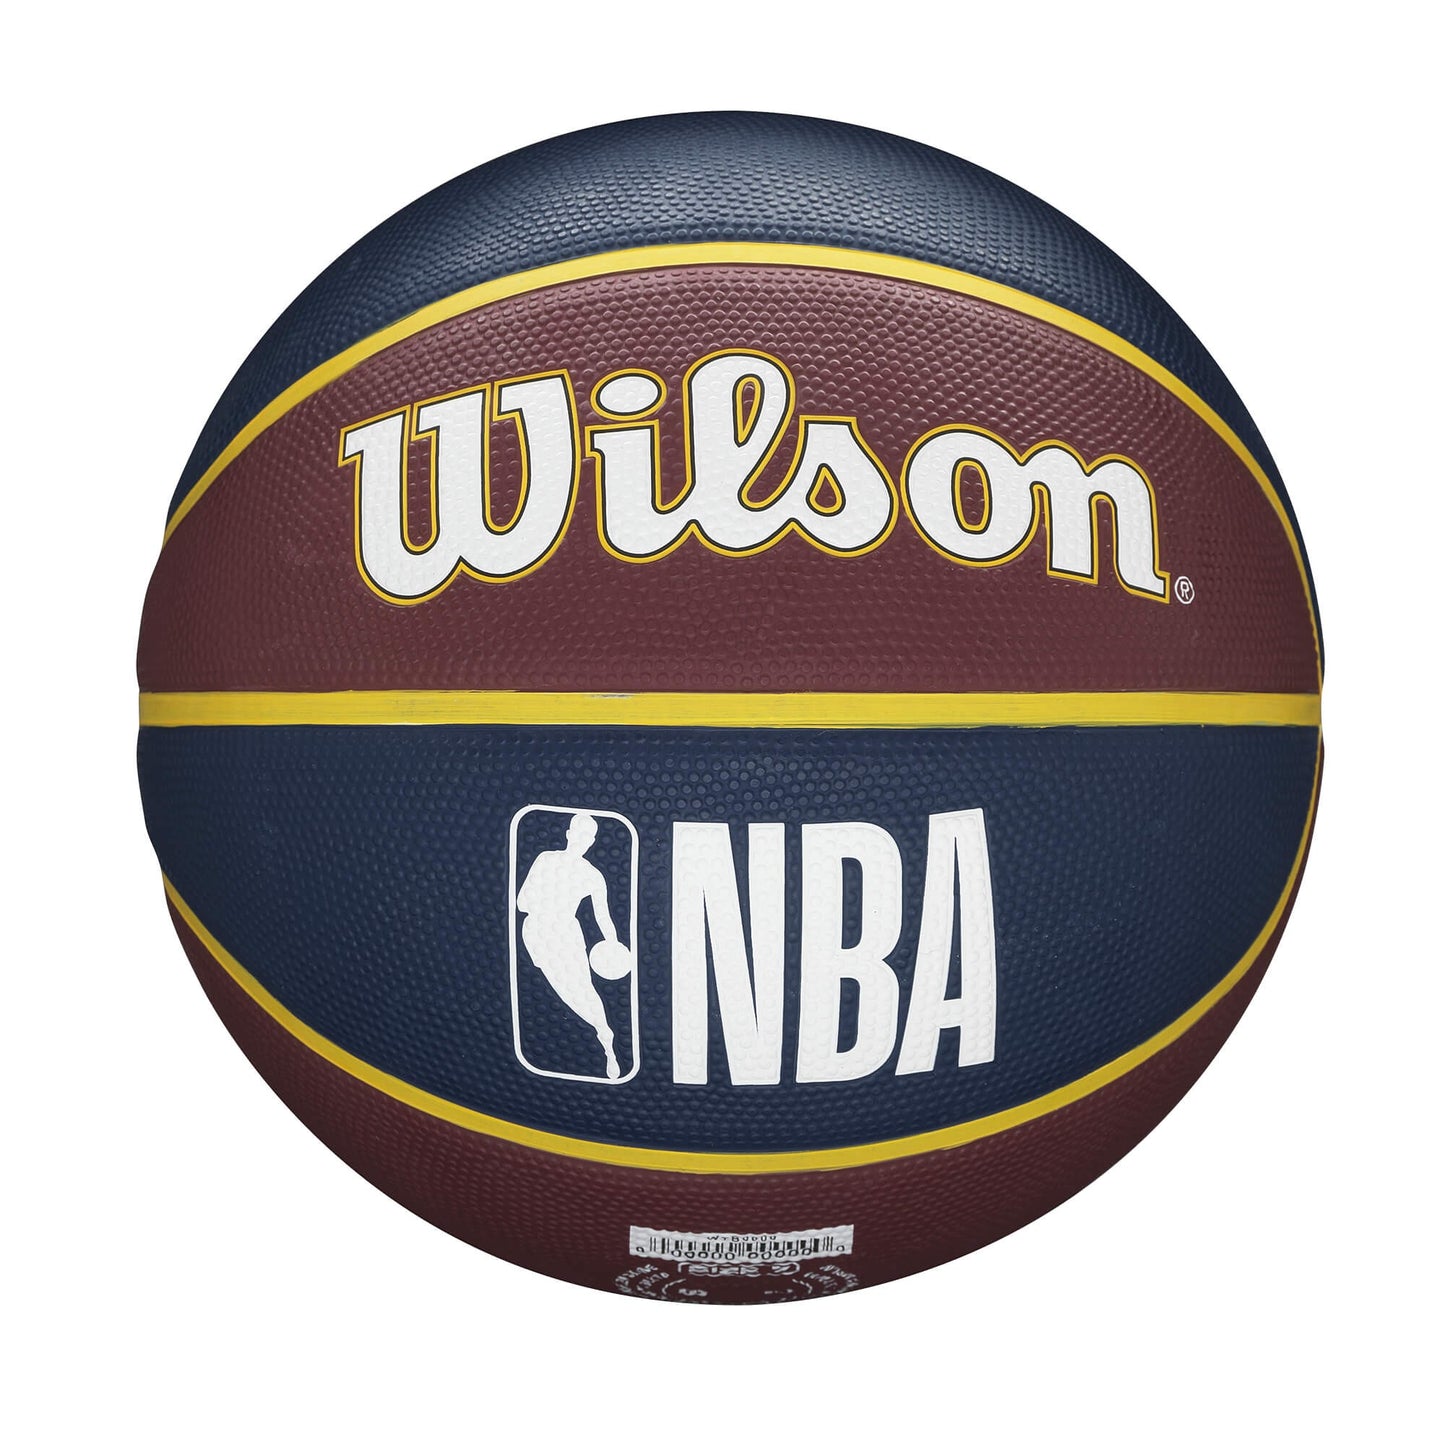 Wilson NBA Team Tribute Basketball Cleveland Cavaliers (sz. 7)